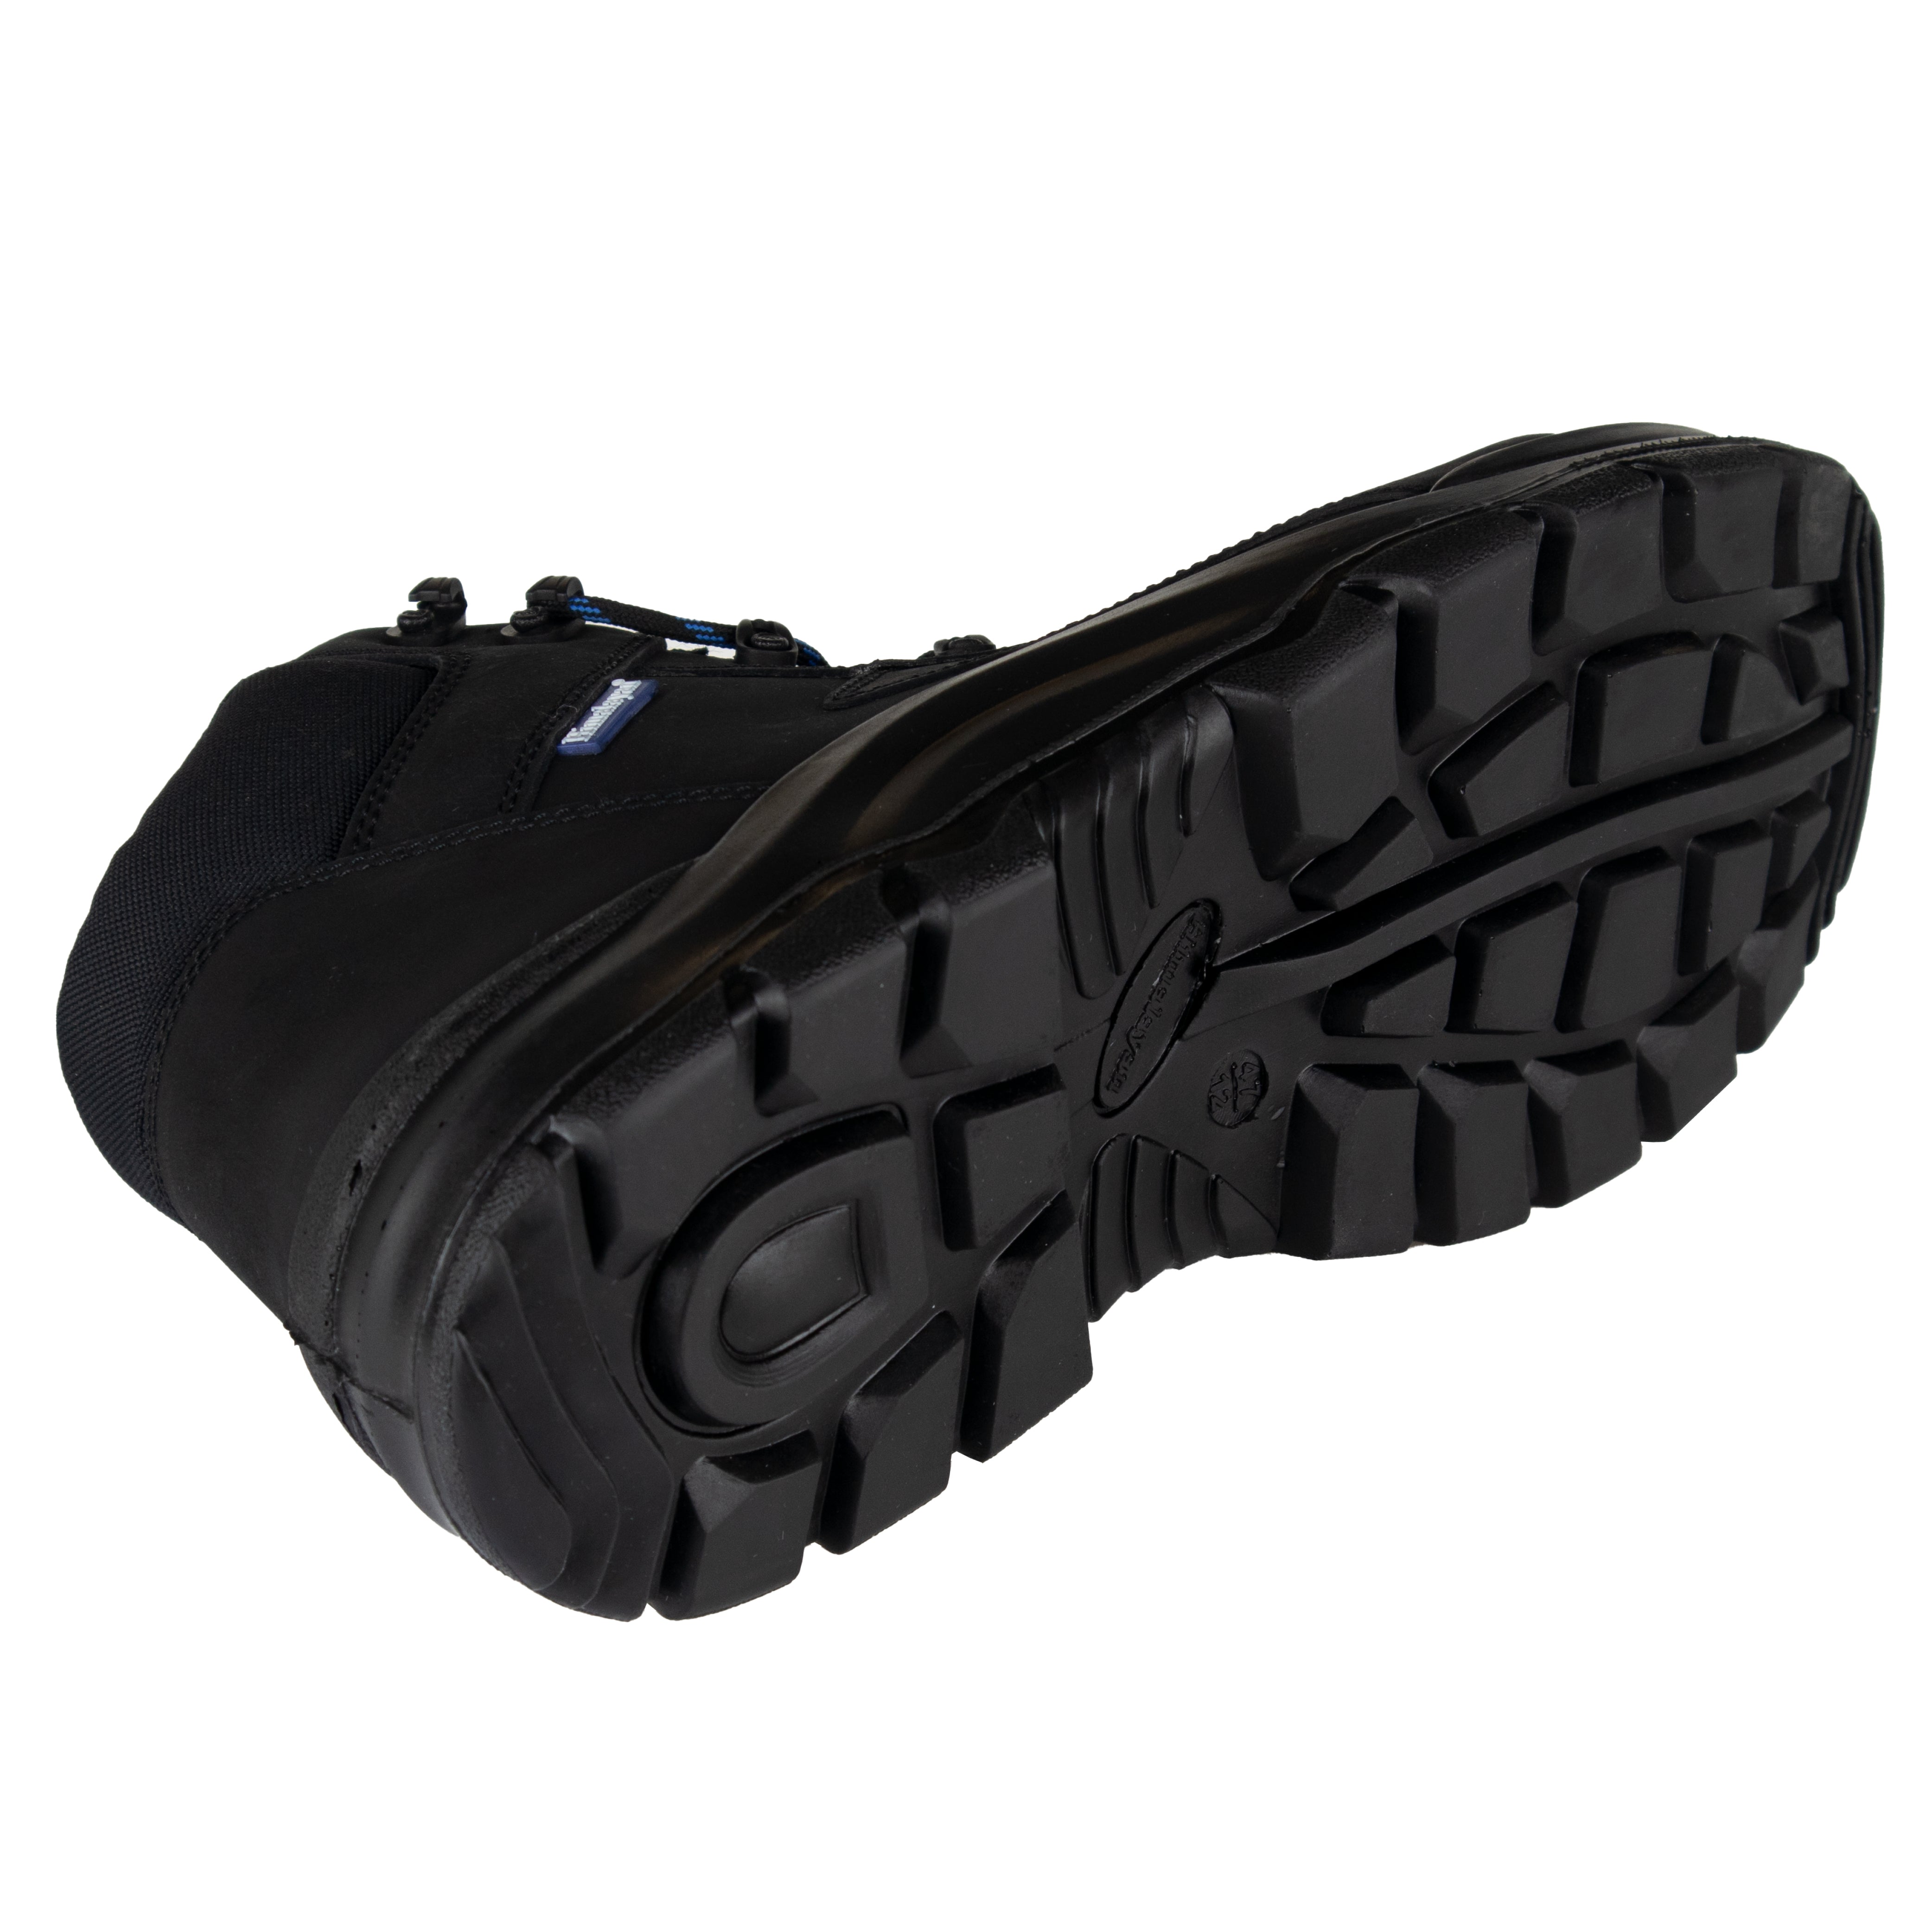 Himalayan Buteo Black S3 Composite Boot